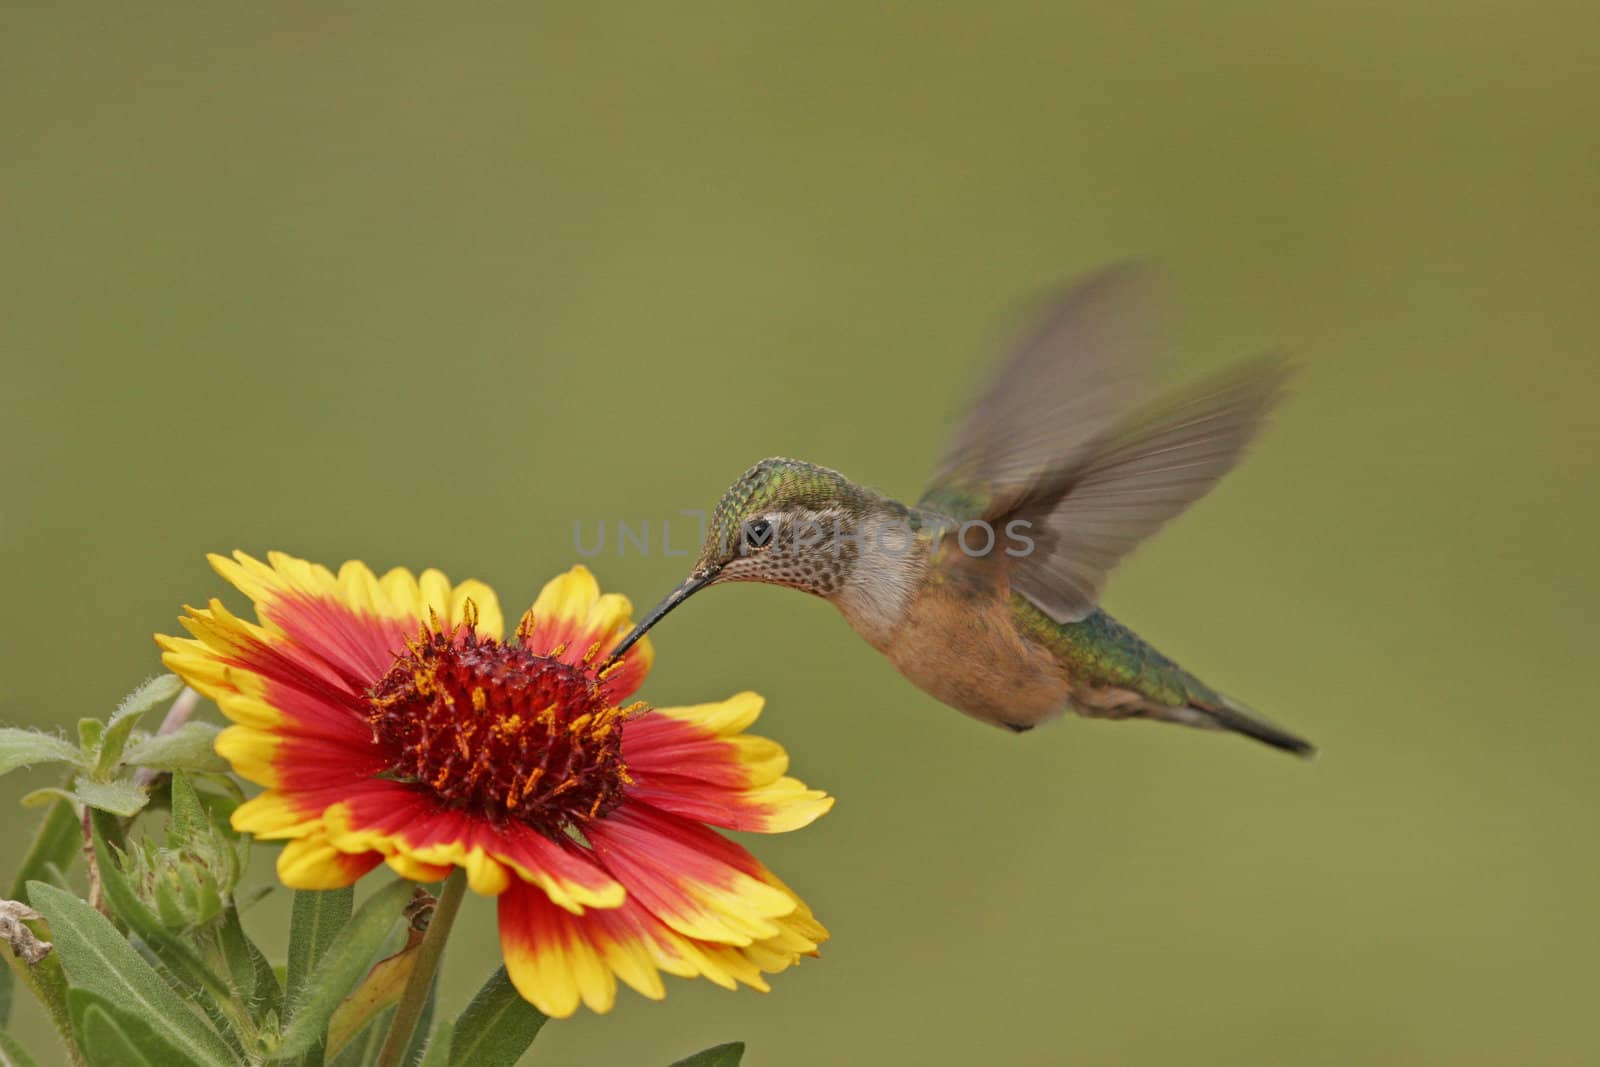 Broad-tailed hummingbird by donya_nedomam